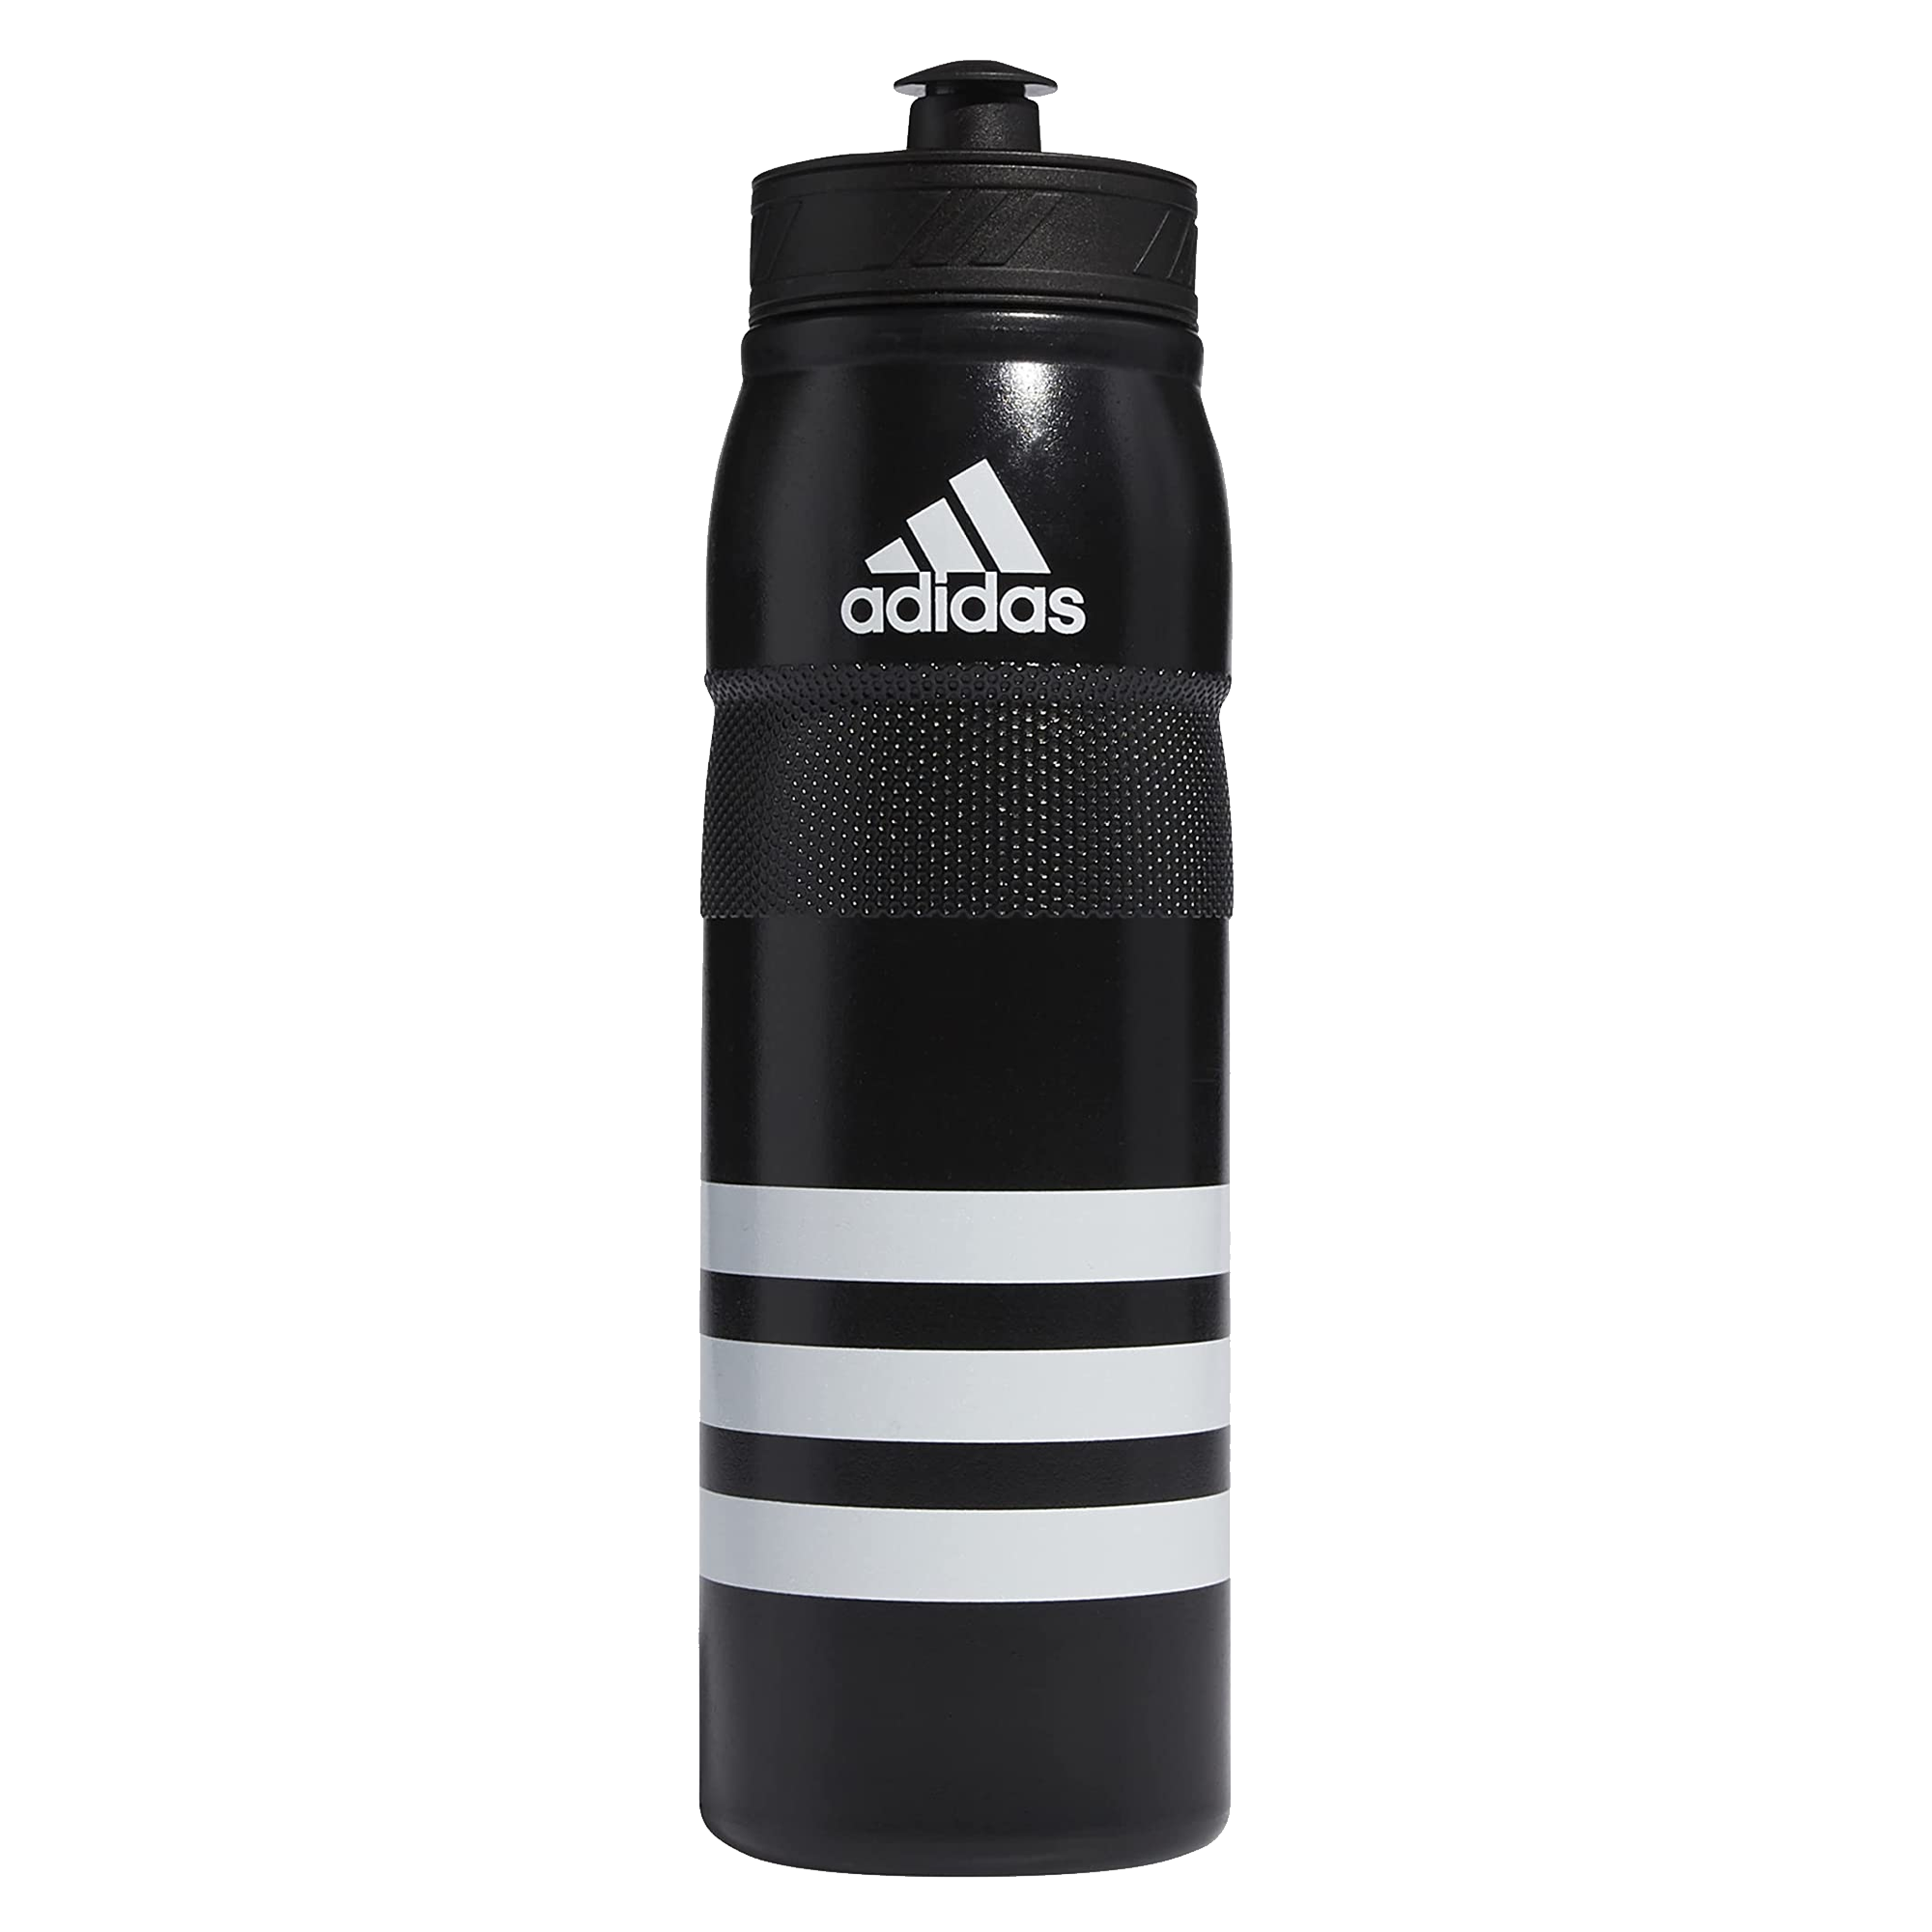 Medicina Forense brillo Jugando ajedrez stefanssoccer.com:adidas adi Water Bottle - Black